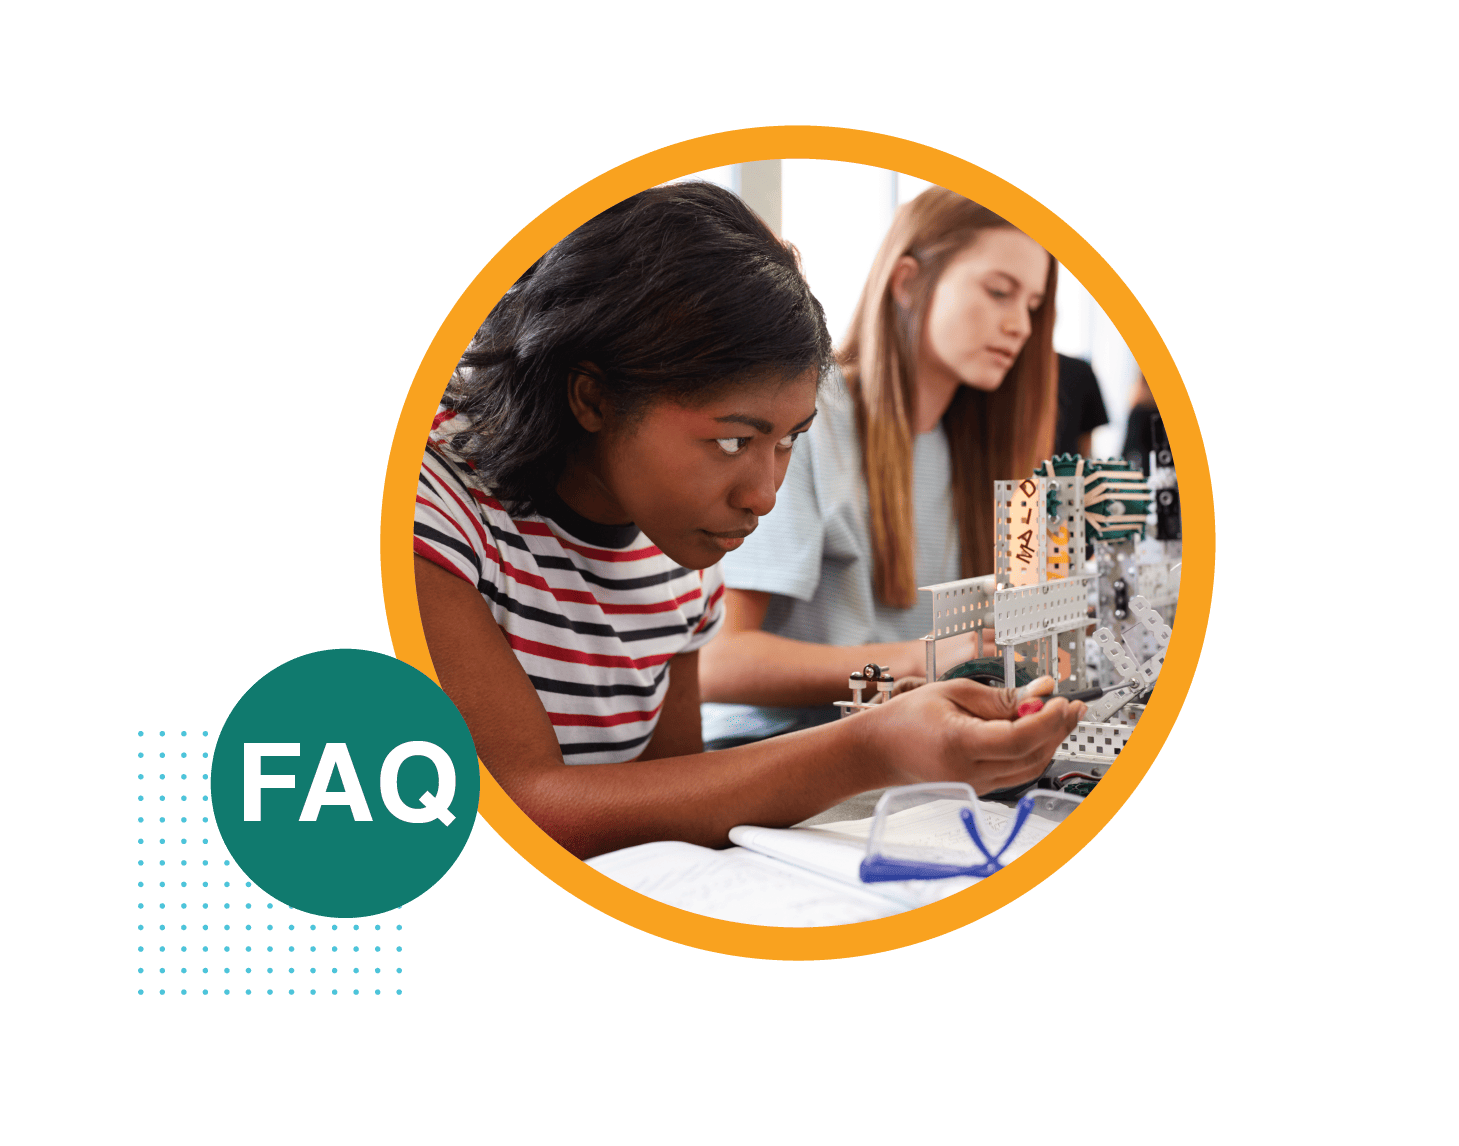 FAQ - Student building a robot